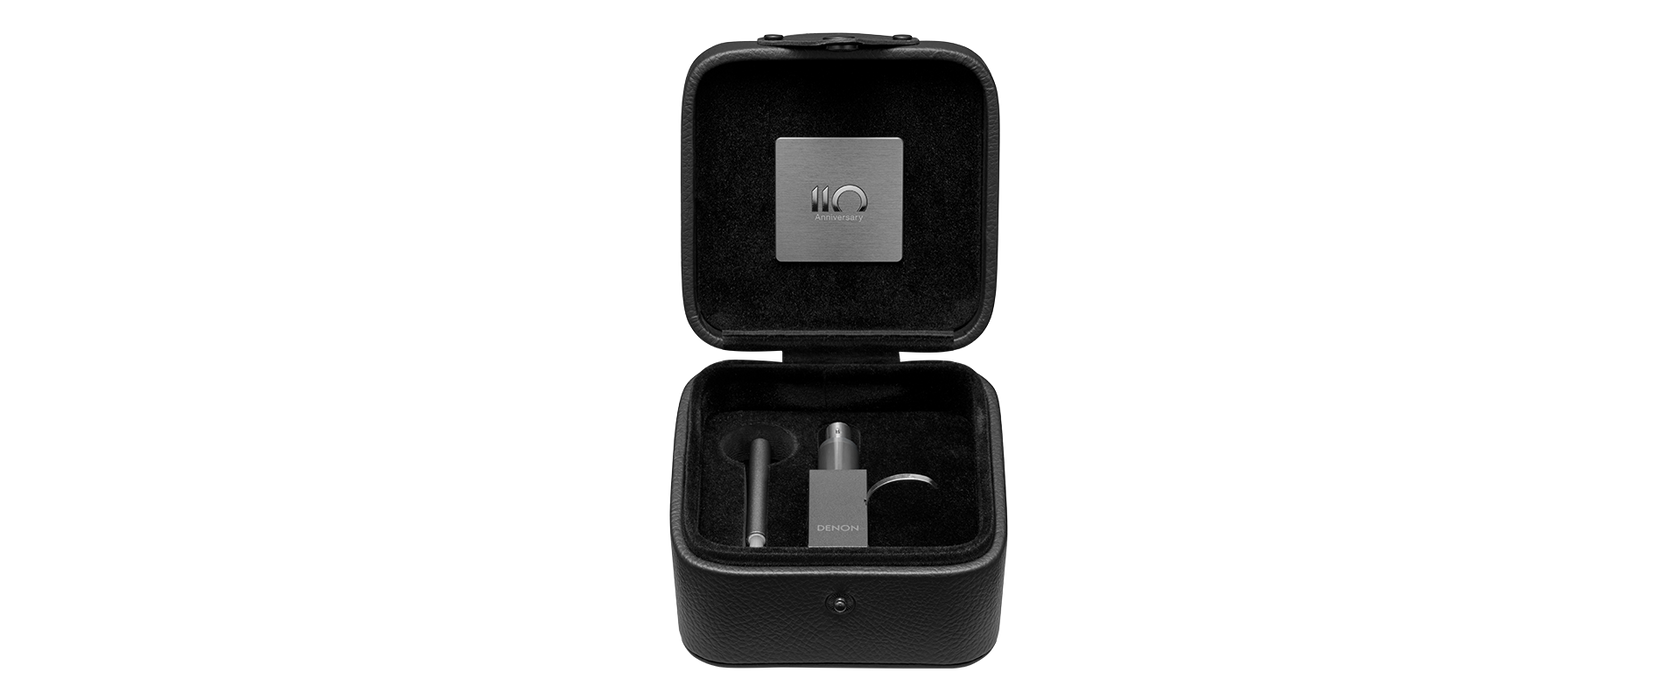 Denon DL-A110 110-Year Anniversary Edition MC Phono Cartridge with Premium Silver-Graphite Headshell Store Demo - Safe and Sound HQ